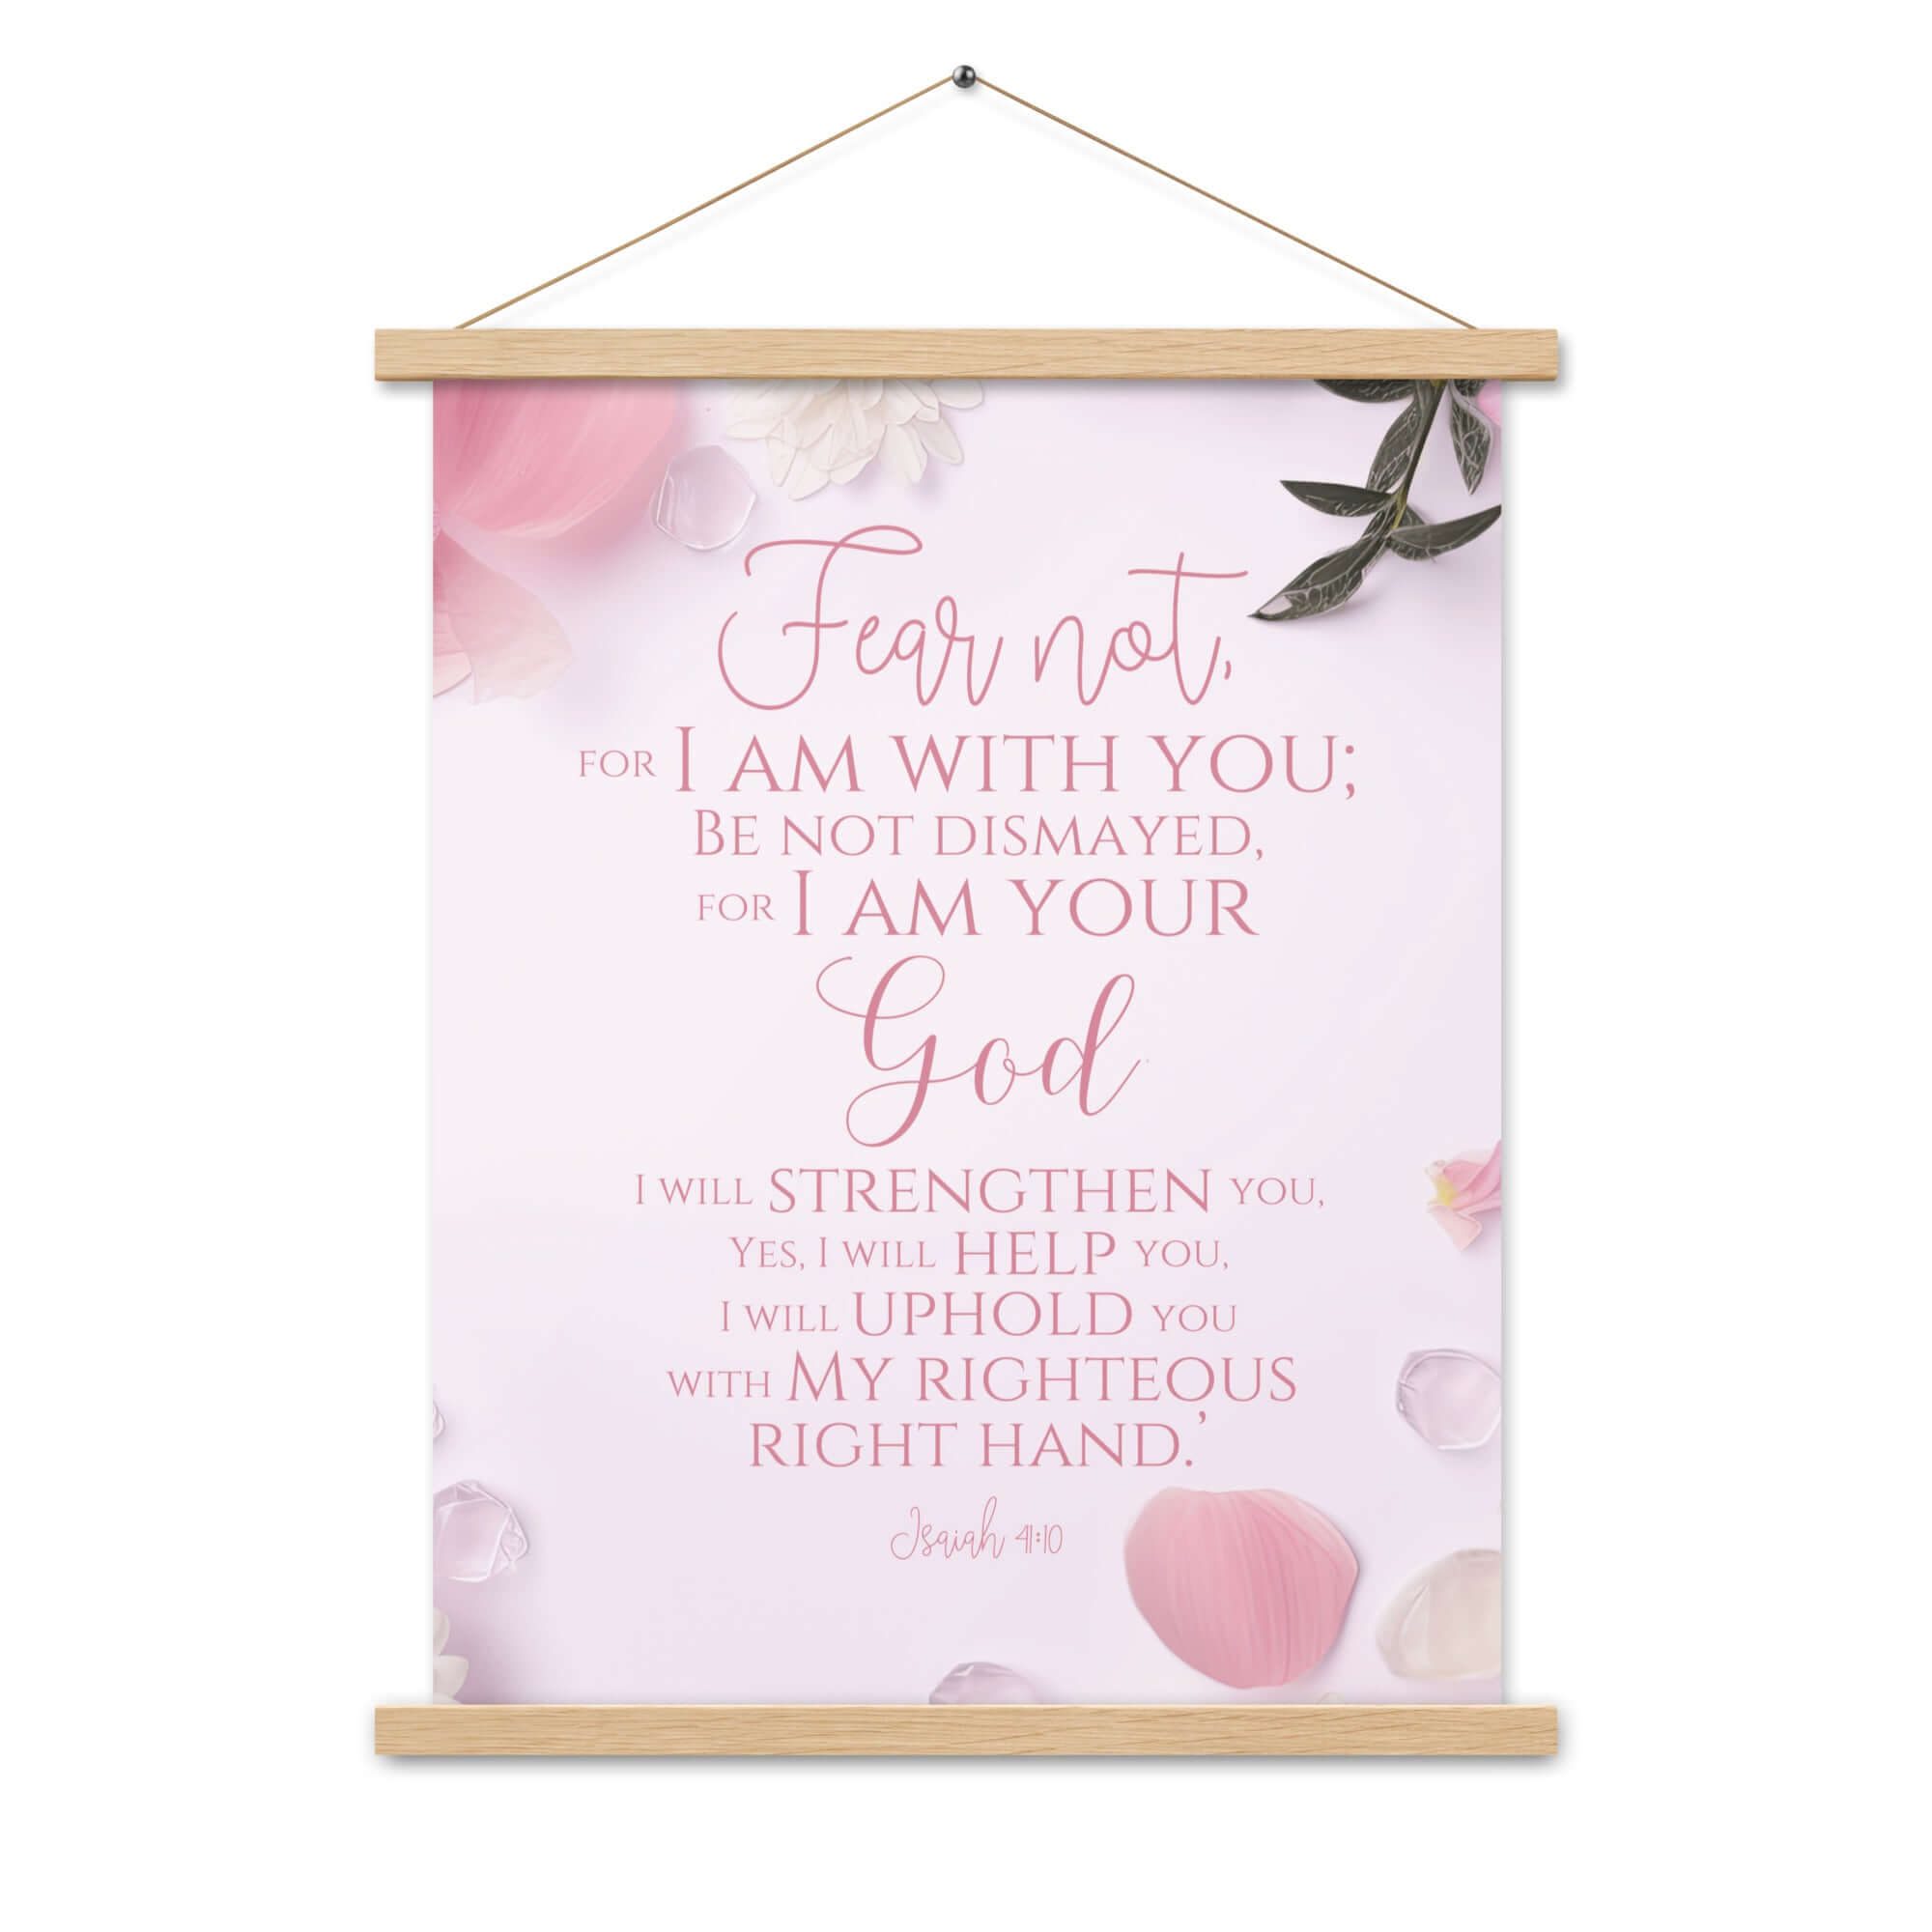 Isaiah 41:10 - Bible Verse, God will strengthen you Hanger Poster